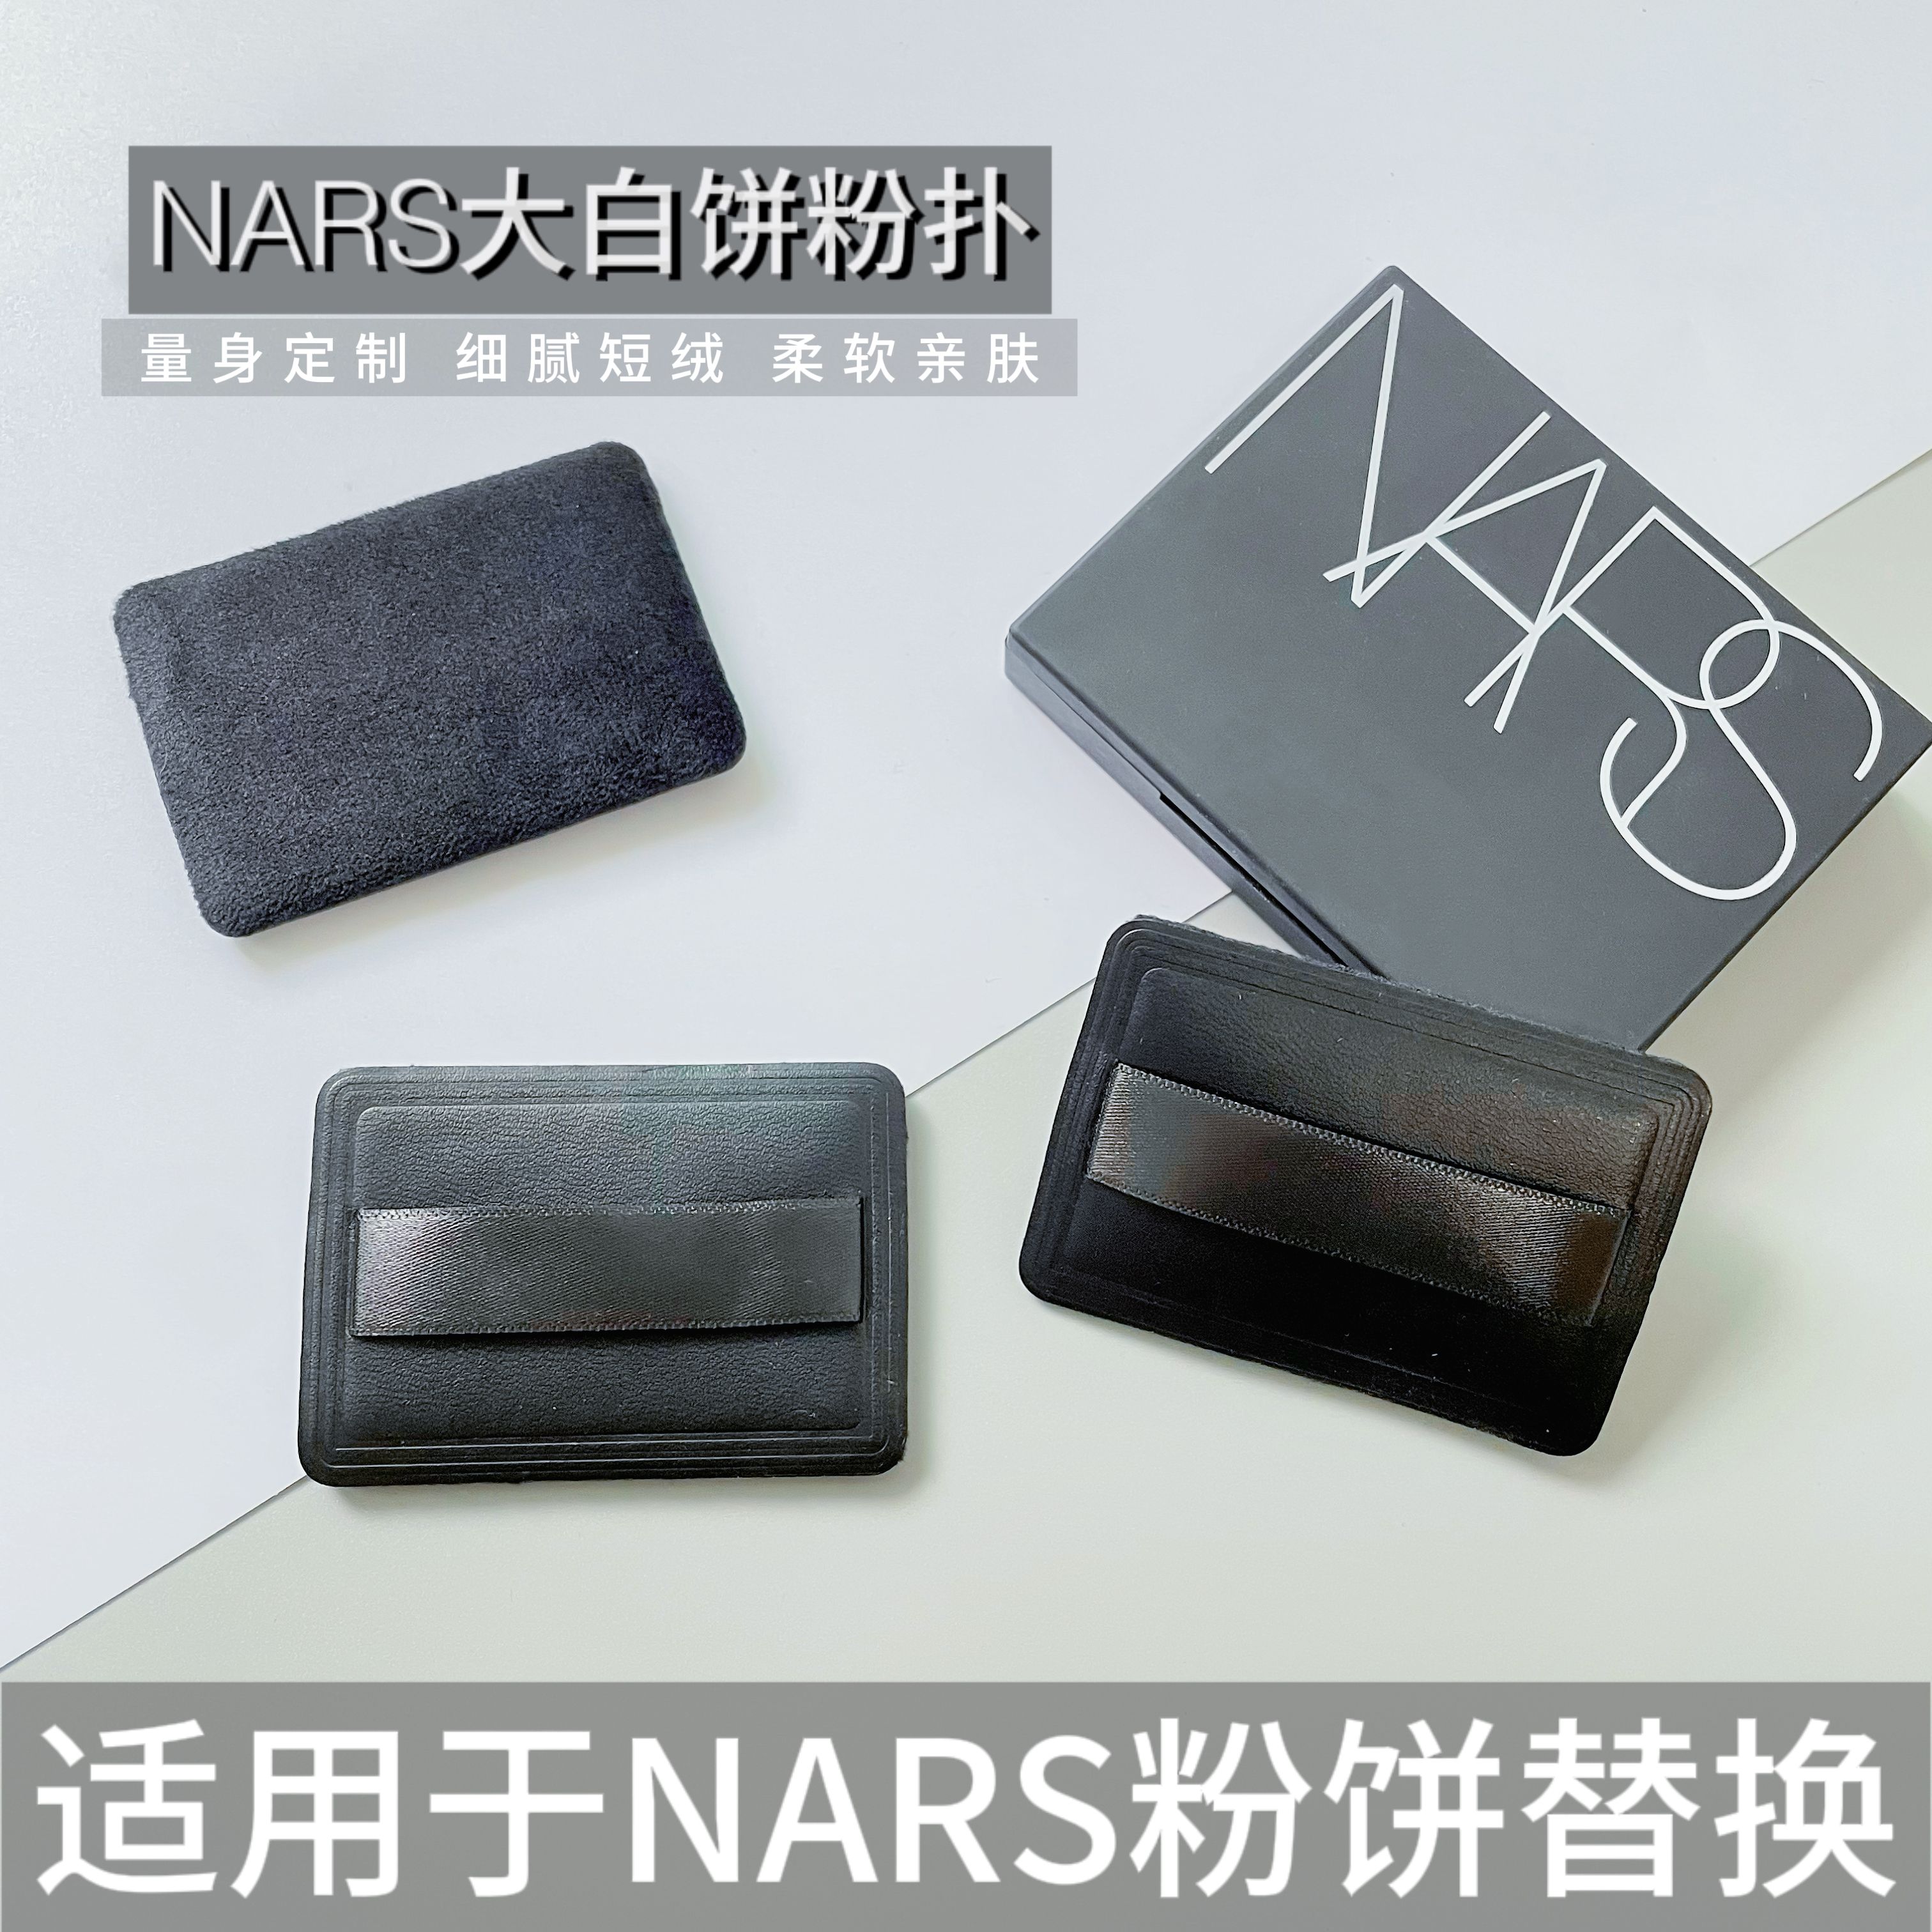 NARS粉饼粉扑纳斯新版10g裸光蜜粉专用长方形植绒粉扑定妆粉扑